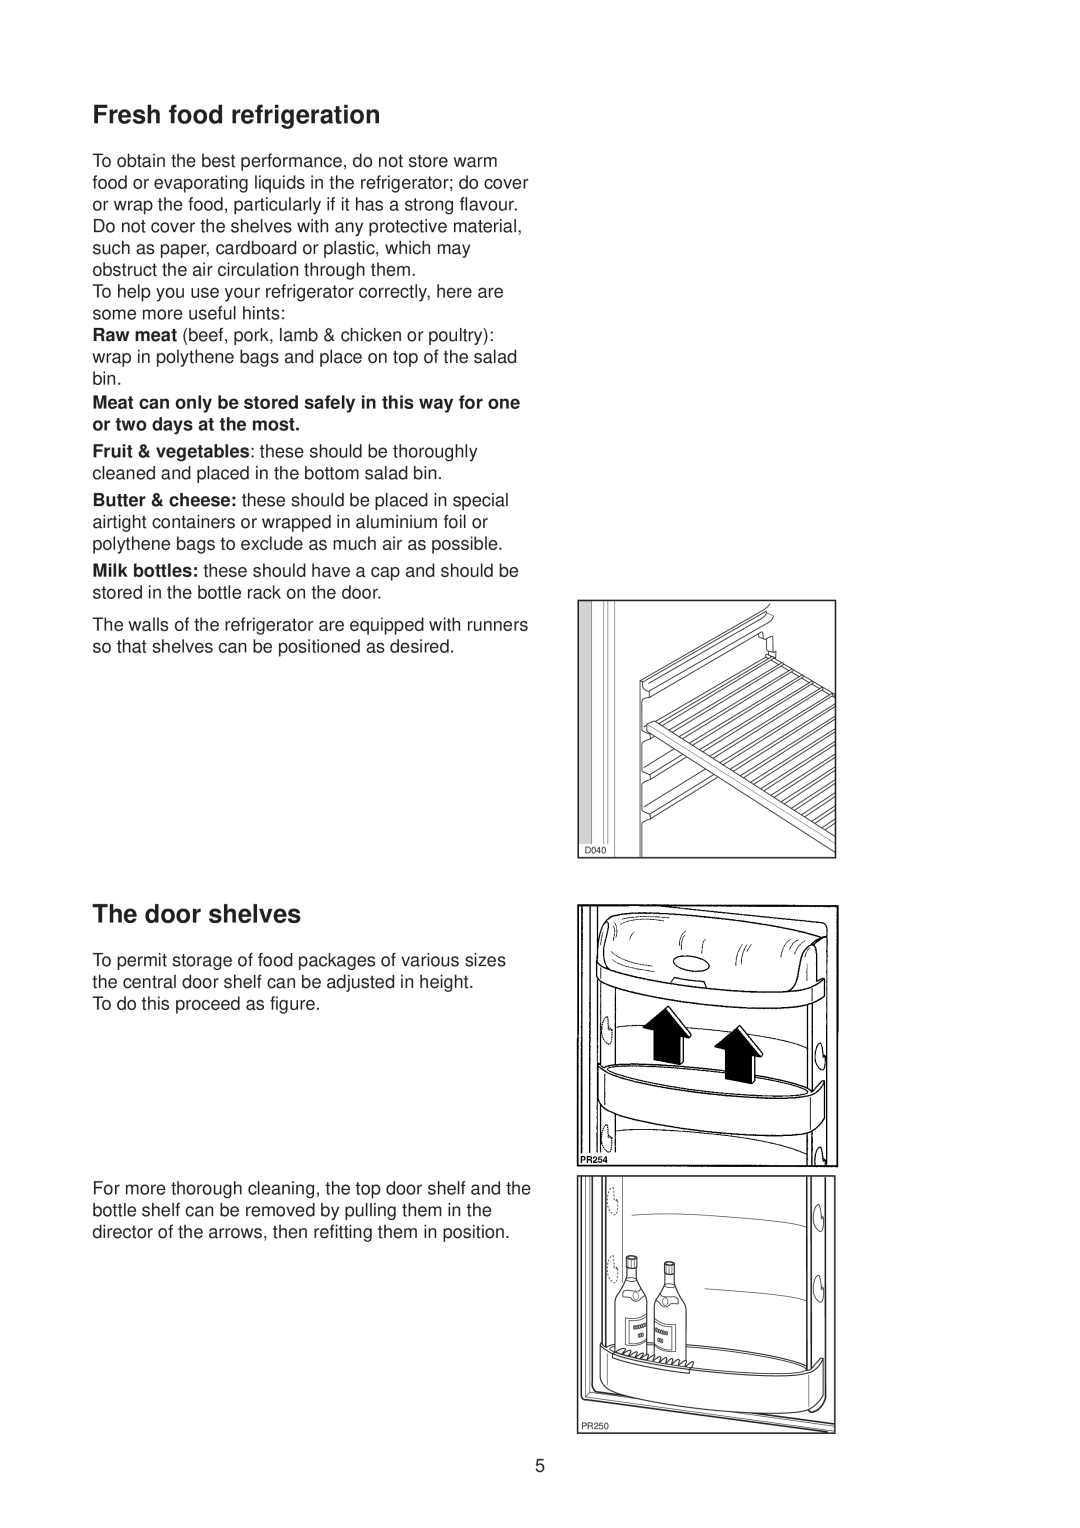 Electrolux U21312 manual Fresh food refrigeration, The door shelves 